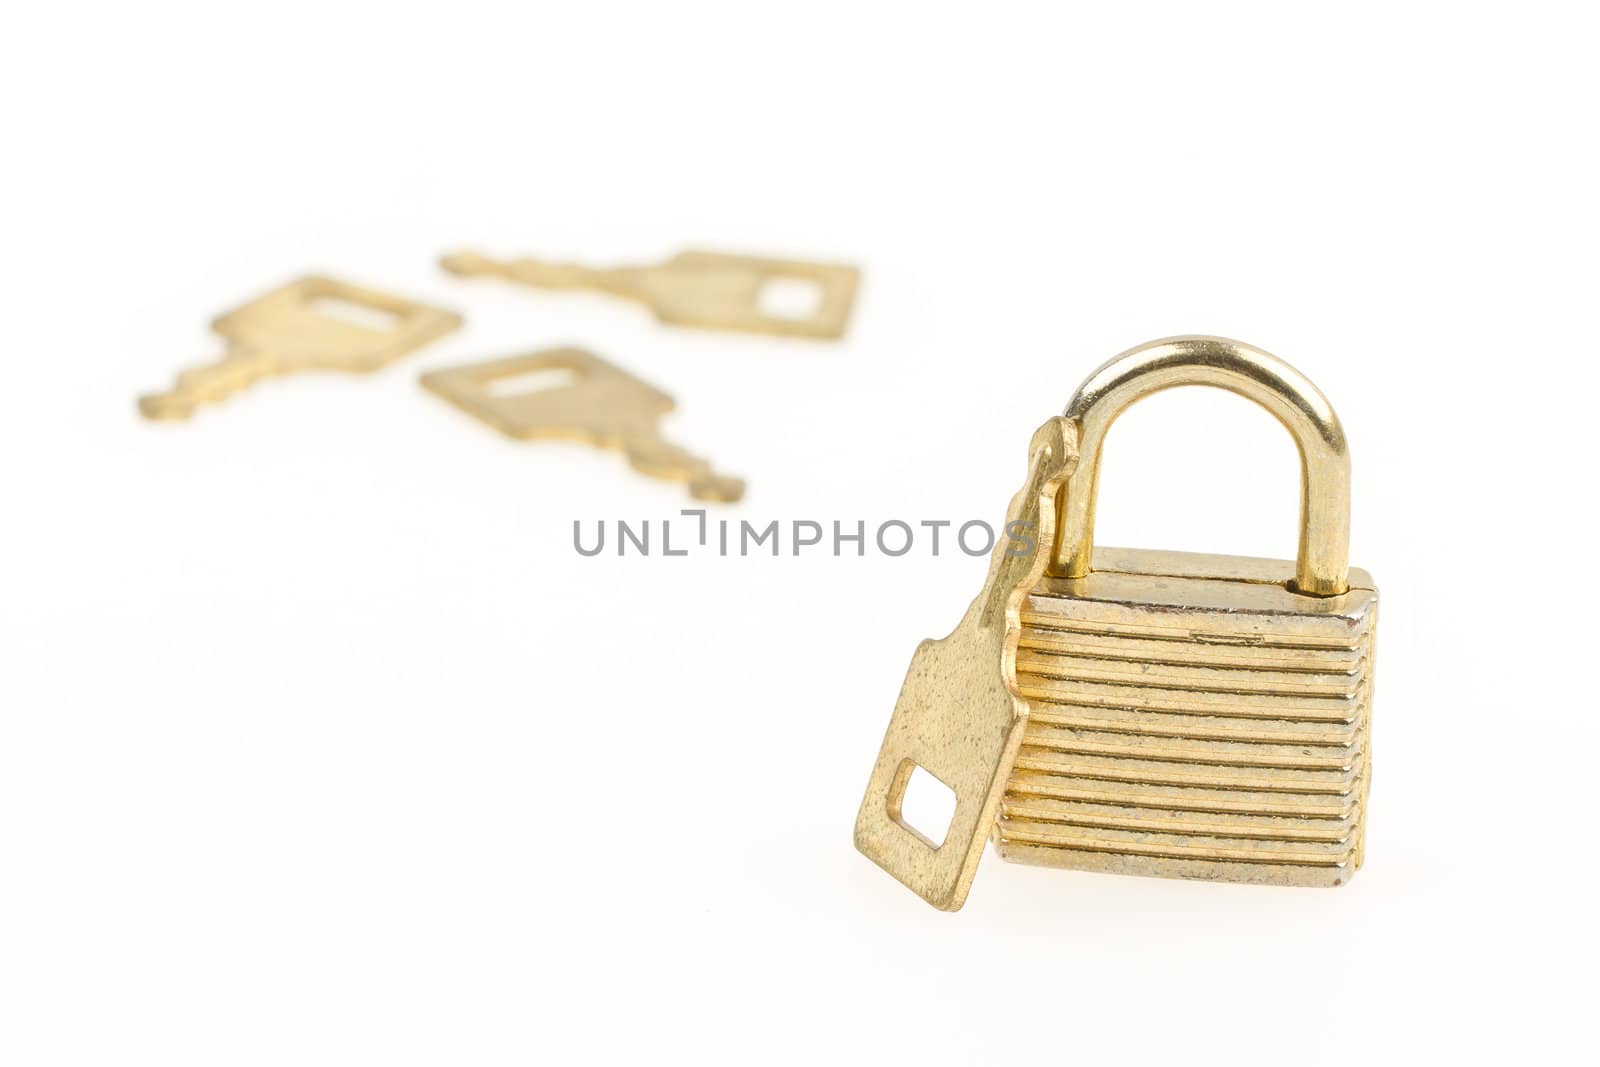 Closed padlock and keys isolated on white background